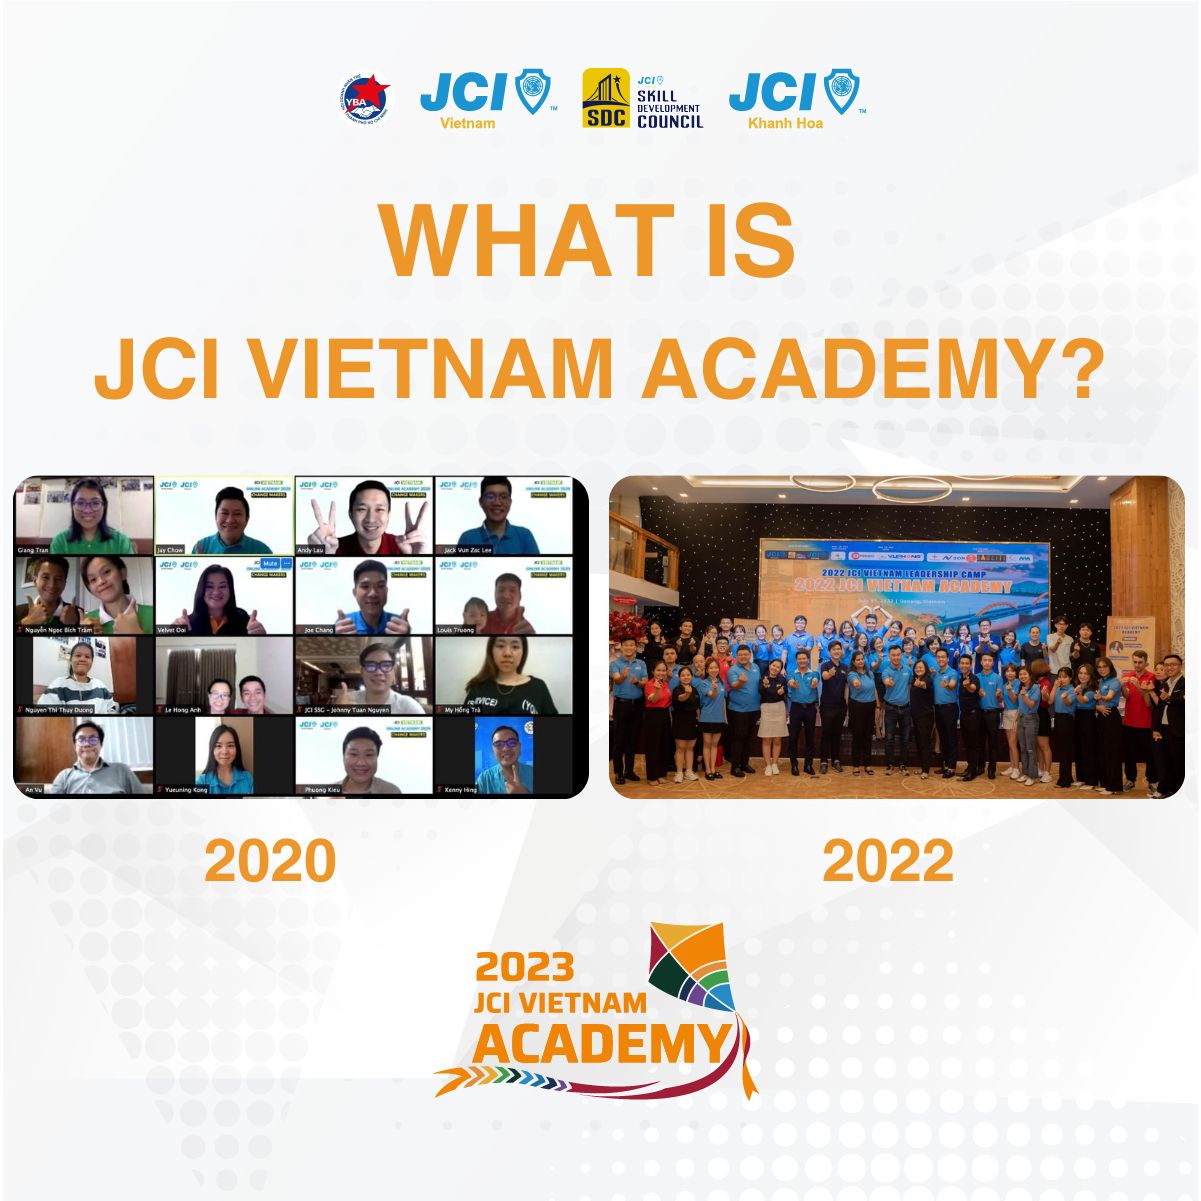 JCI Vietnam Academy là gì?